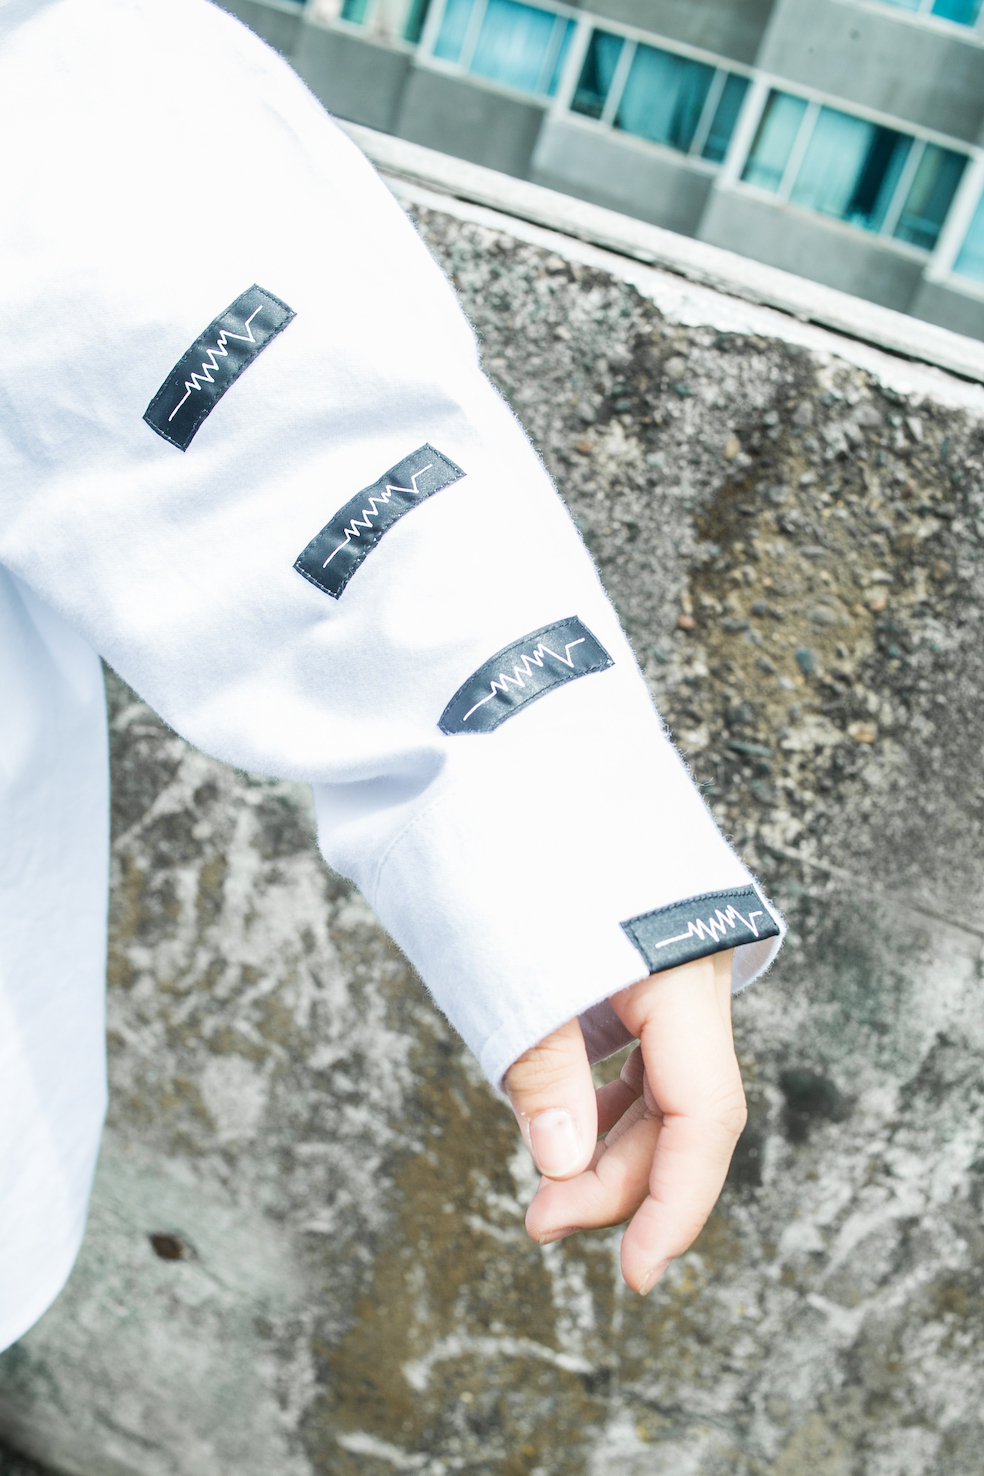 SUSU Original 5th Anniversary 2XL flannel white shirt